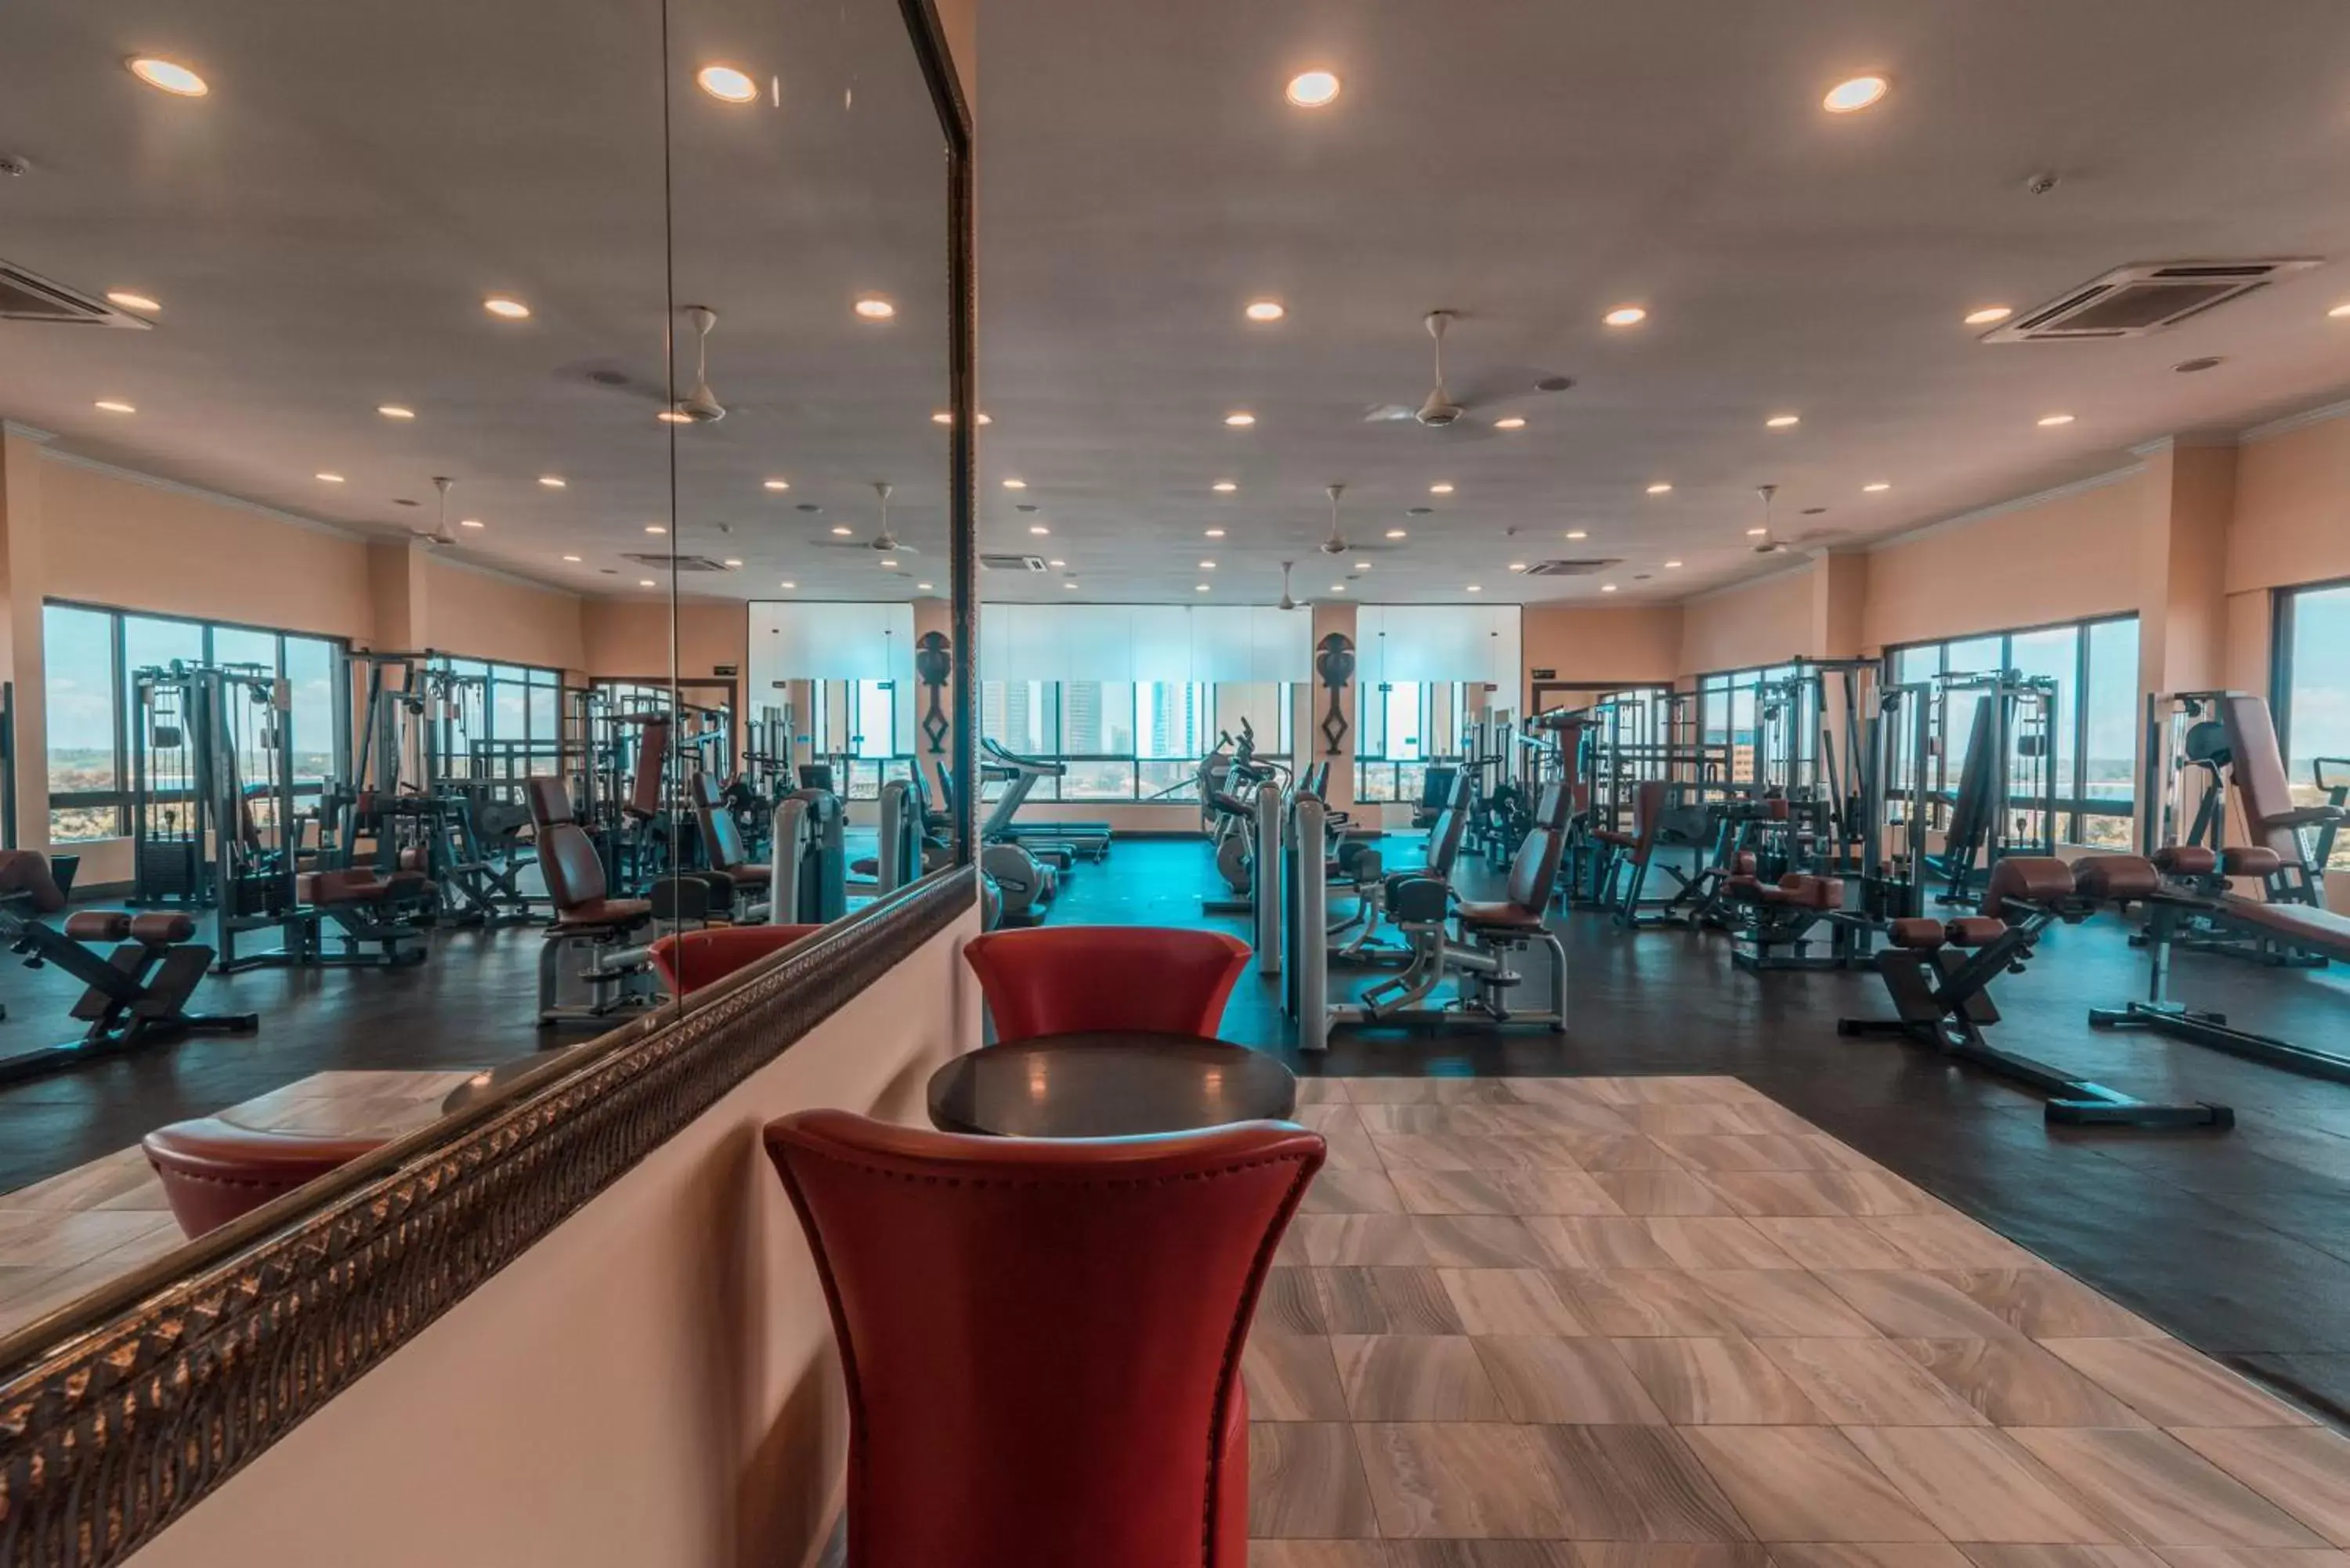 Fitness centre/facilities, Fitness Center/Facilities in CBD Hotel